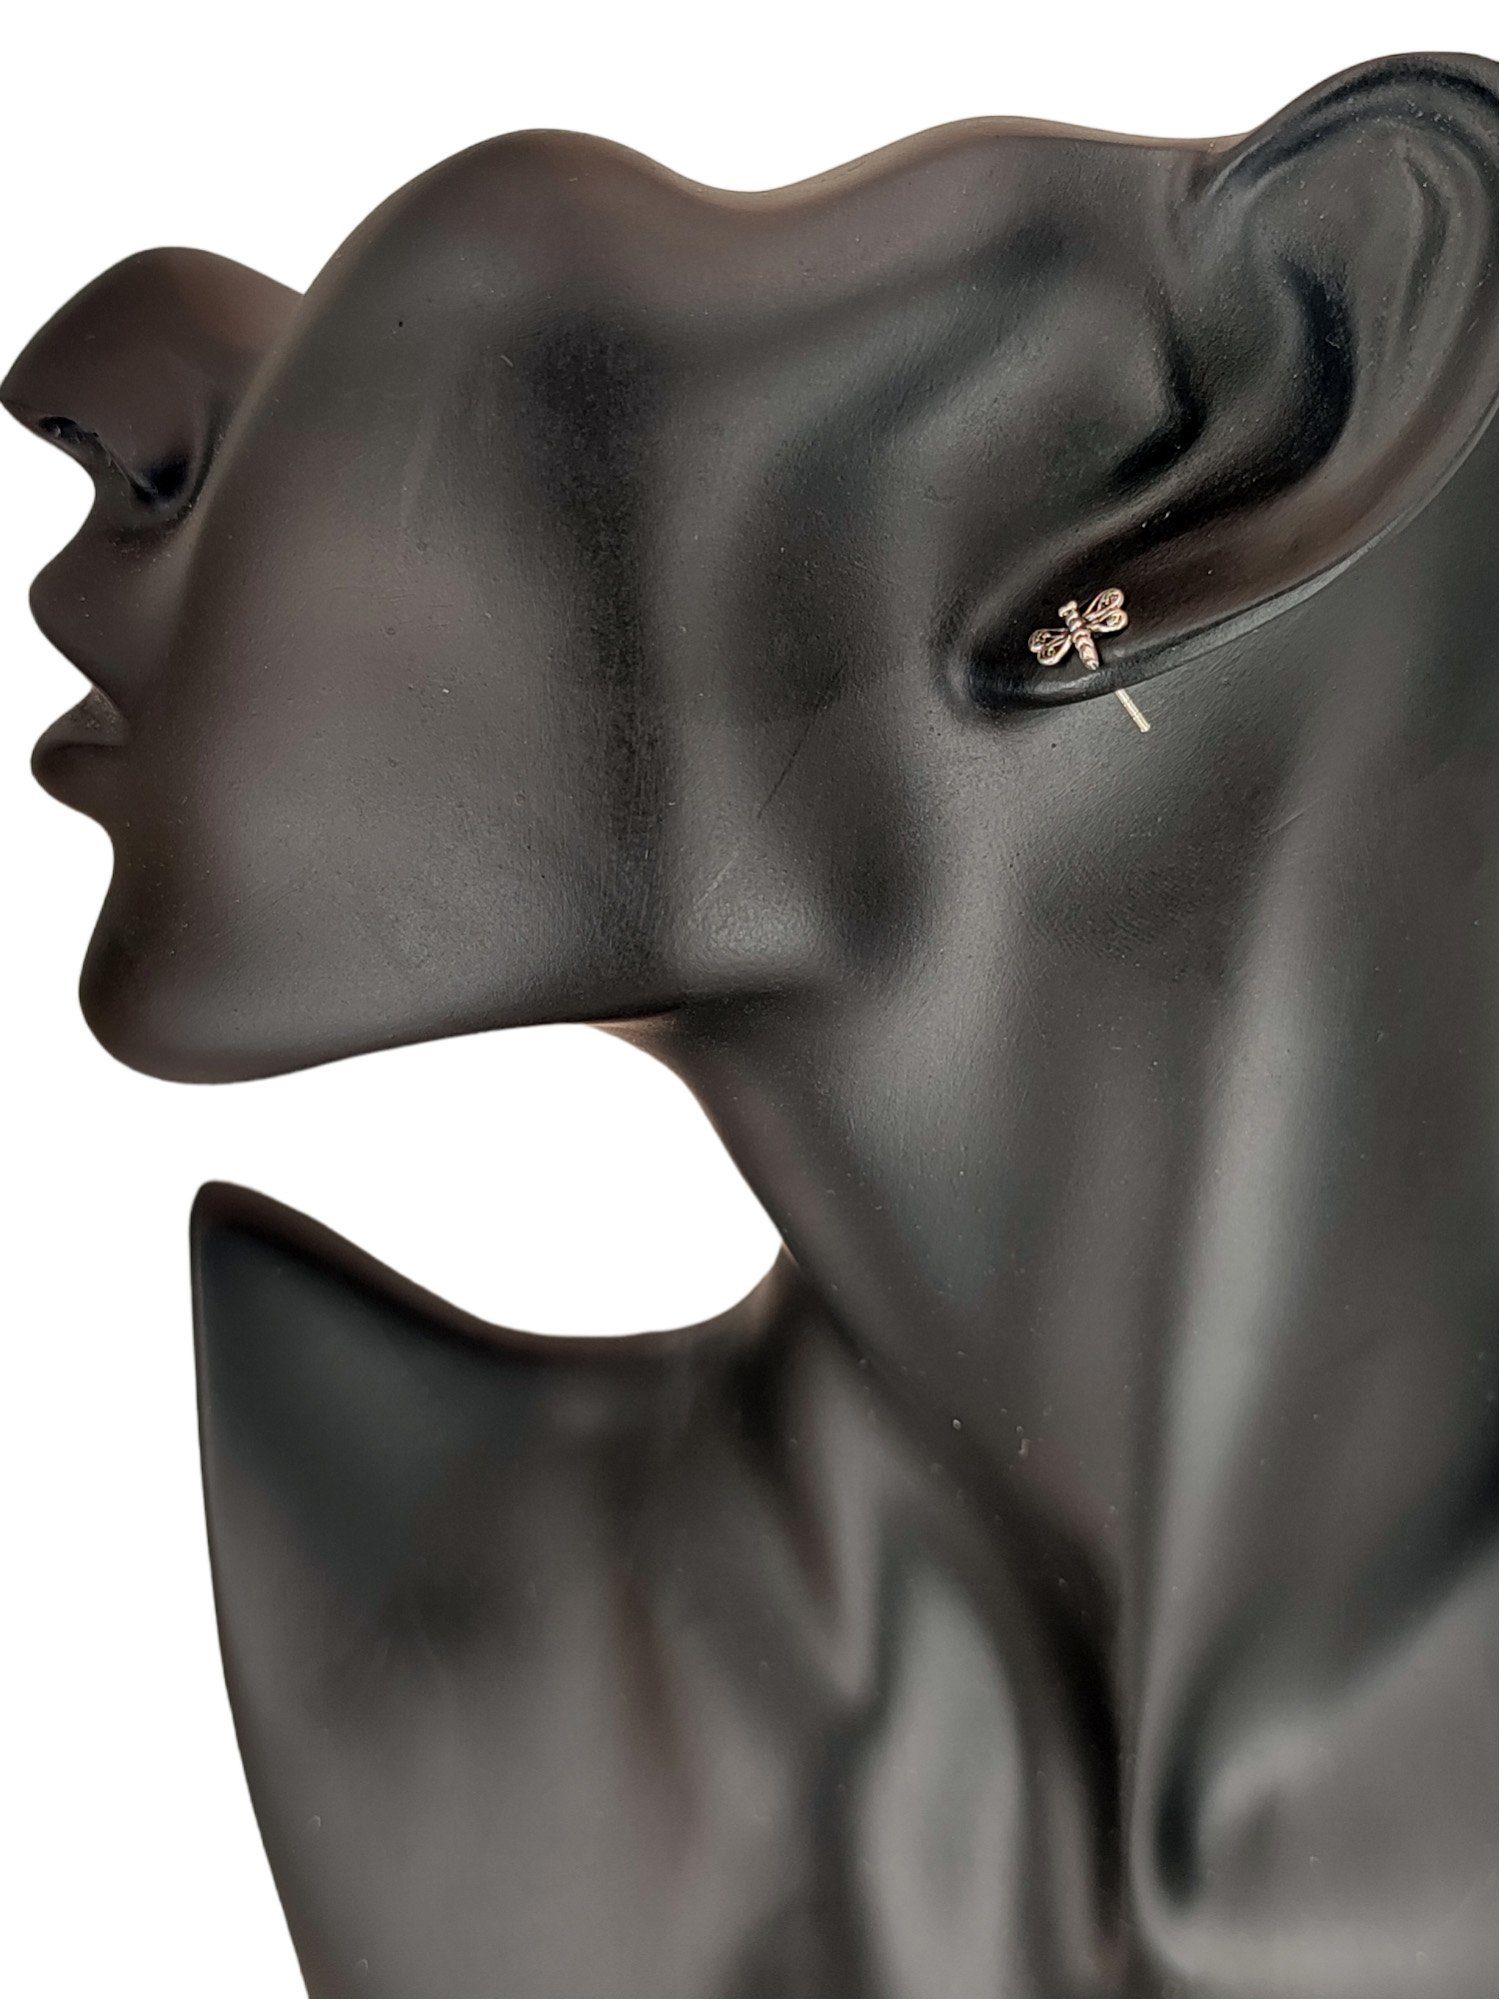 Kiss of Paarpreis Ohrstecker-Set Ohrringe Libelle Ohrring Ohr Silber Leather Sterling 925